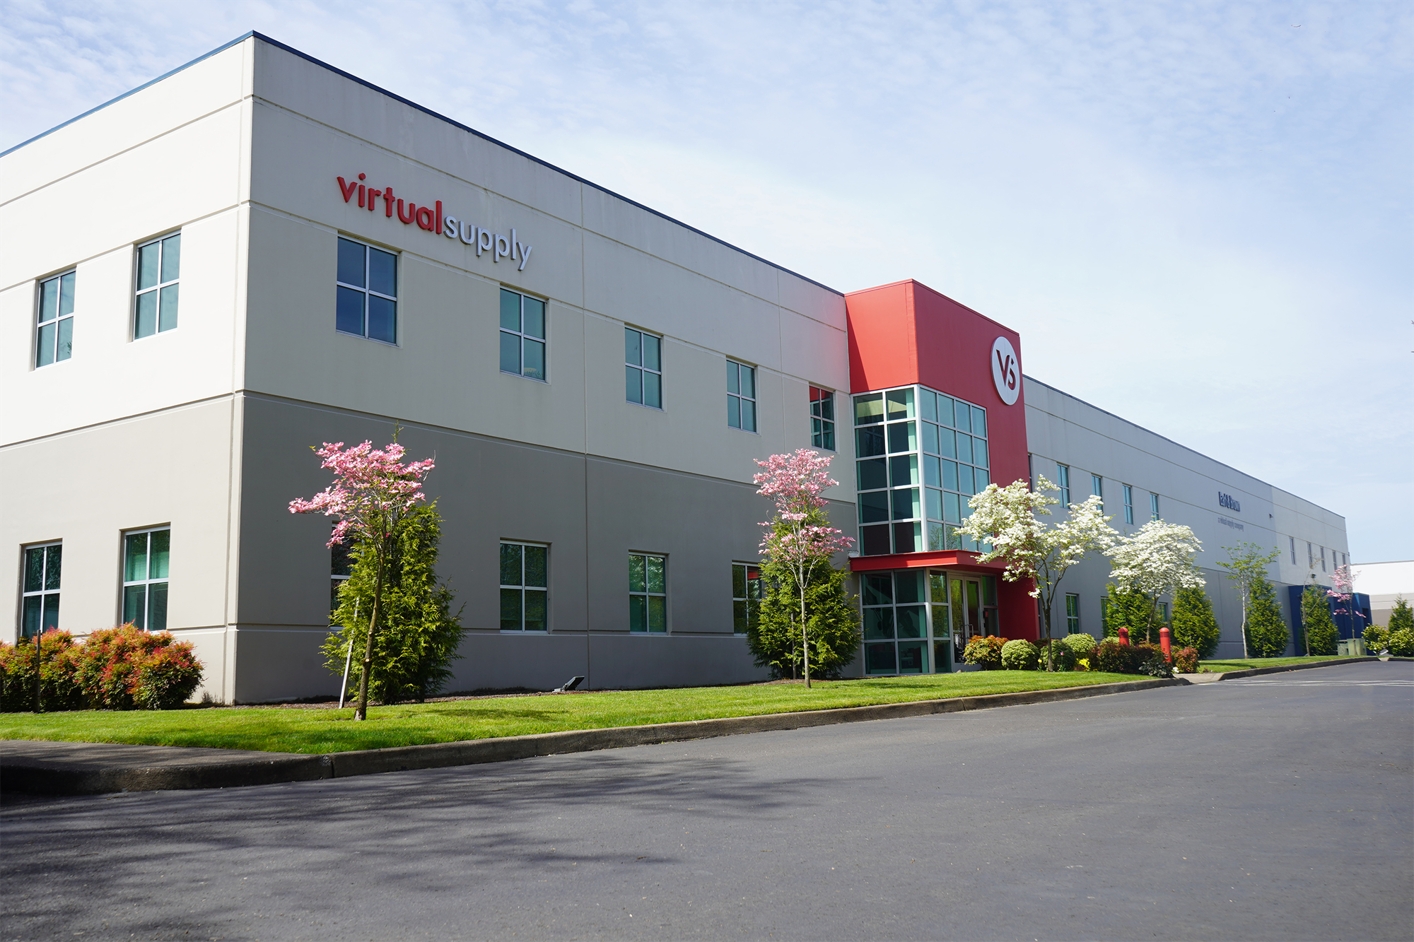 Virtual Supply Campus located in Beaverton, Oregon